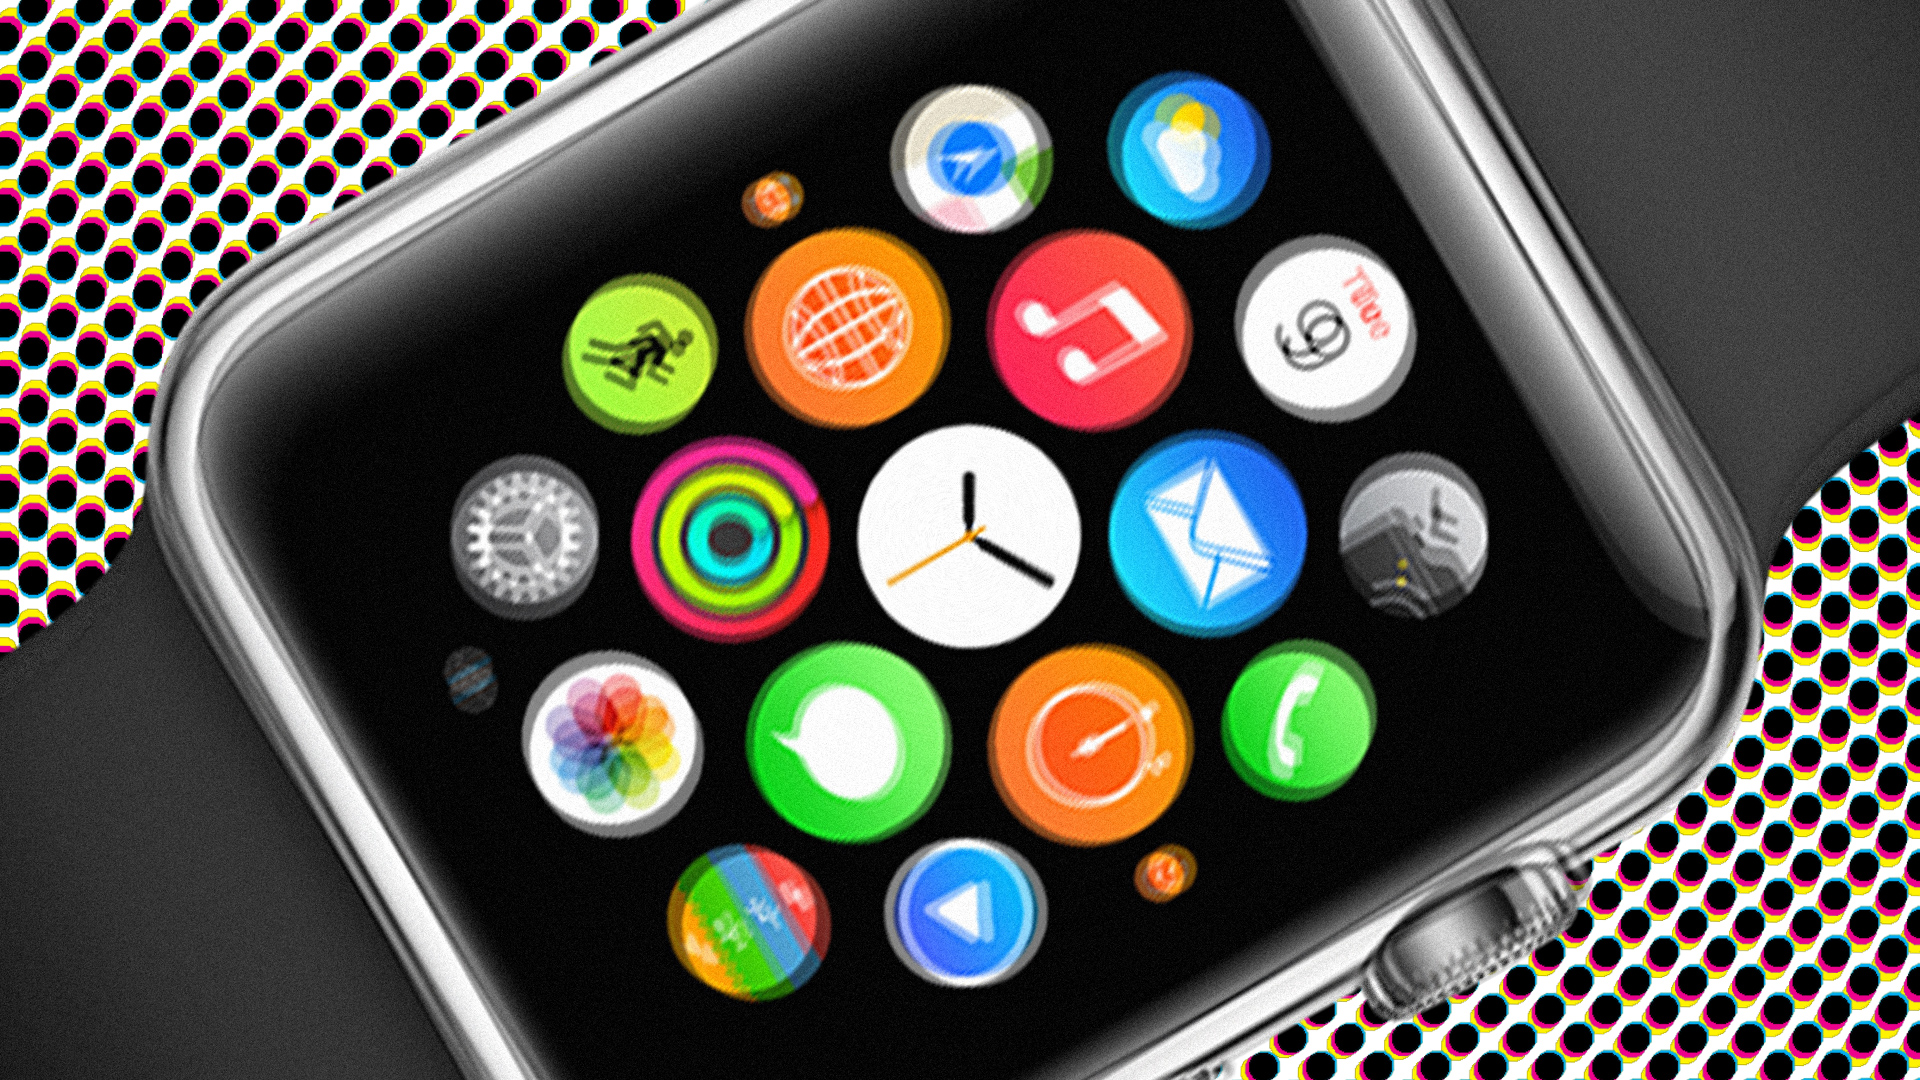 apple watch wallpaper hd,gadget,smartphone,technologie,kommunikationsgerät,tragbares kommunikationsgerät